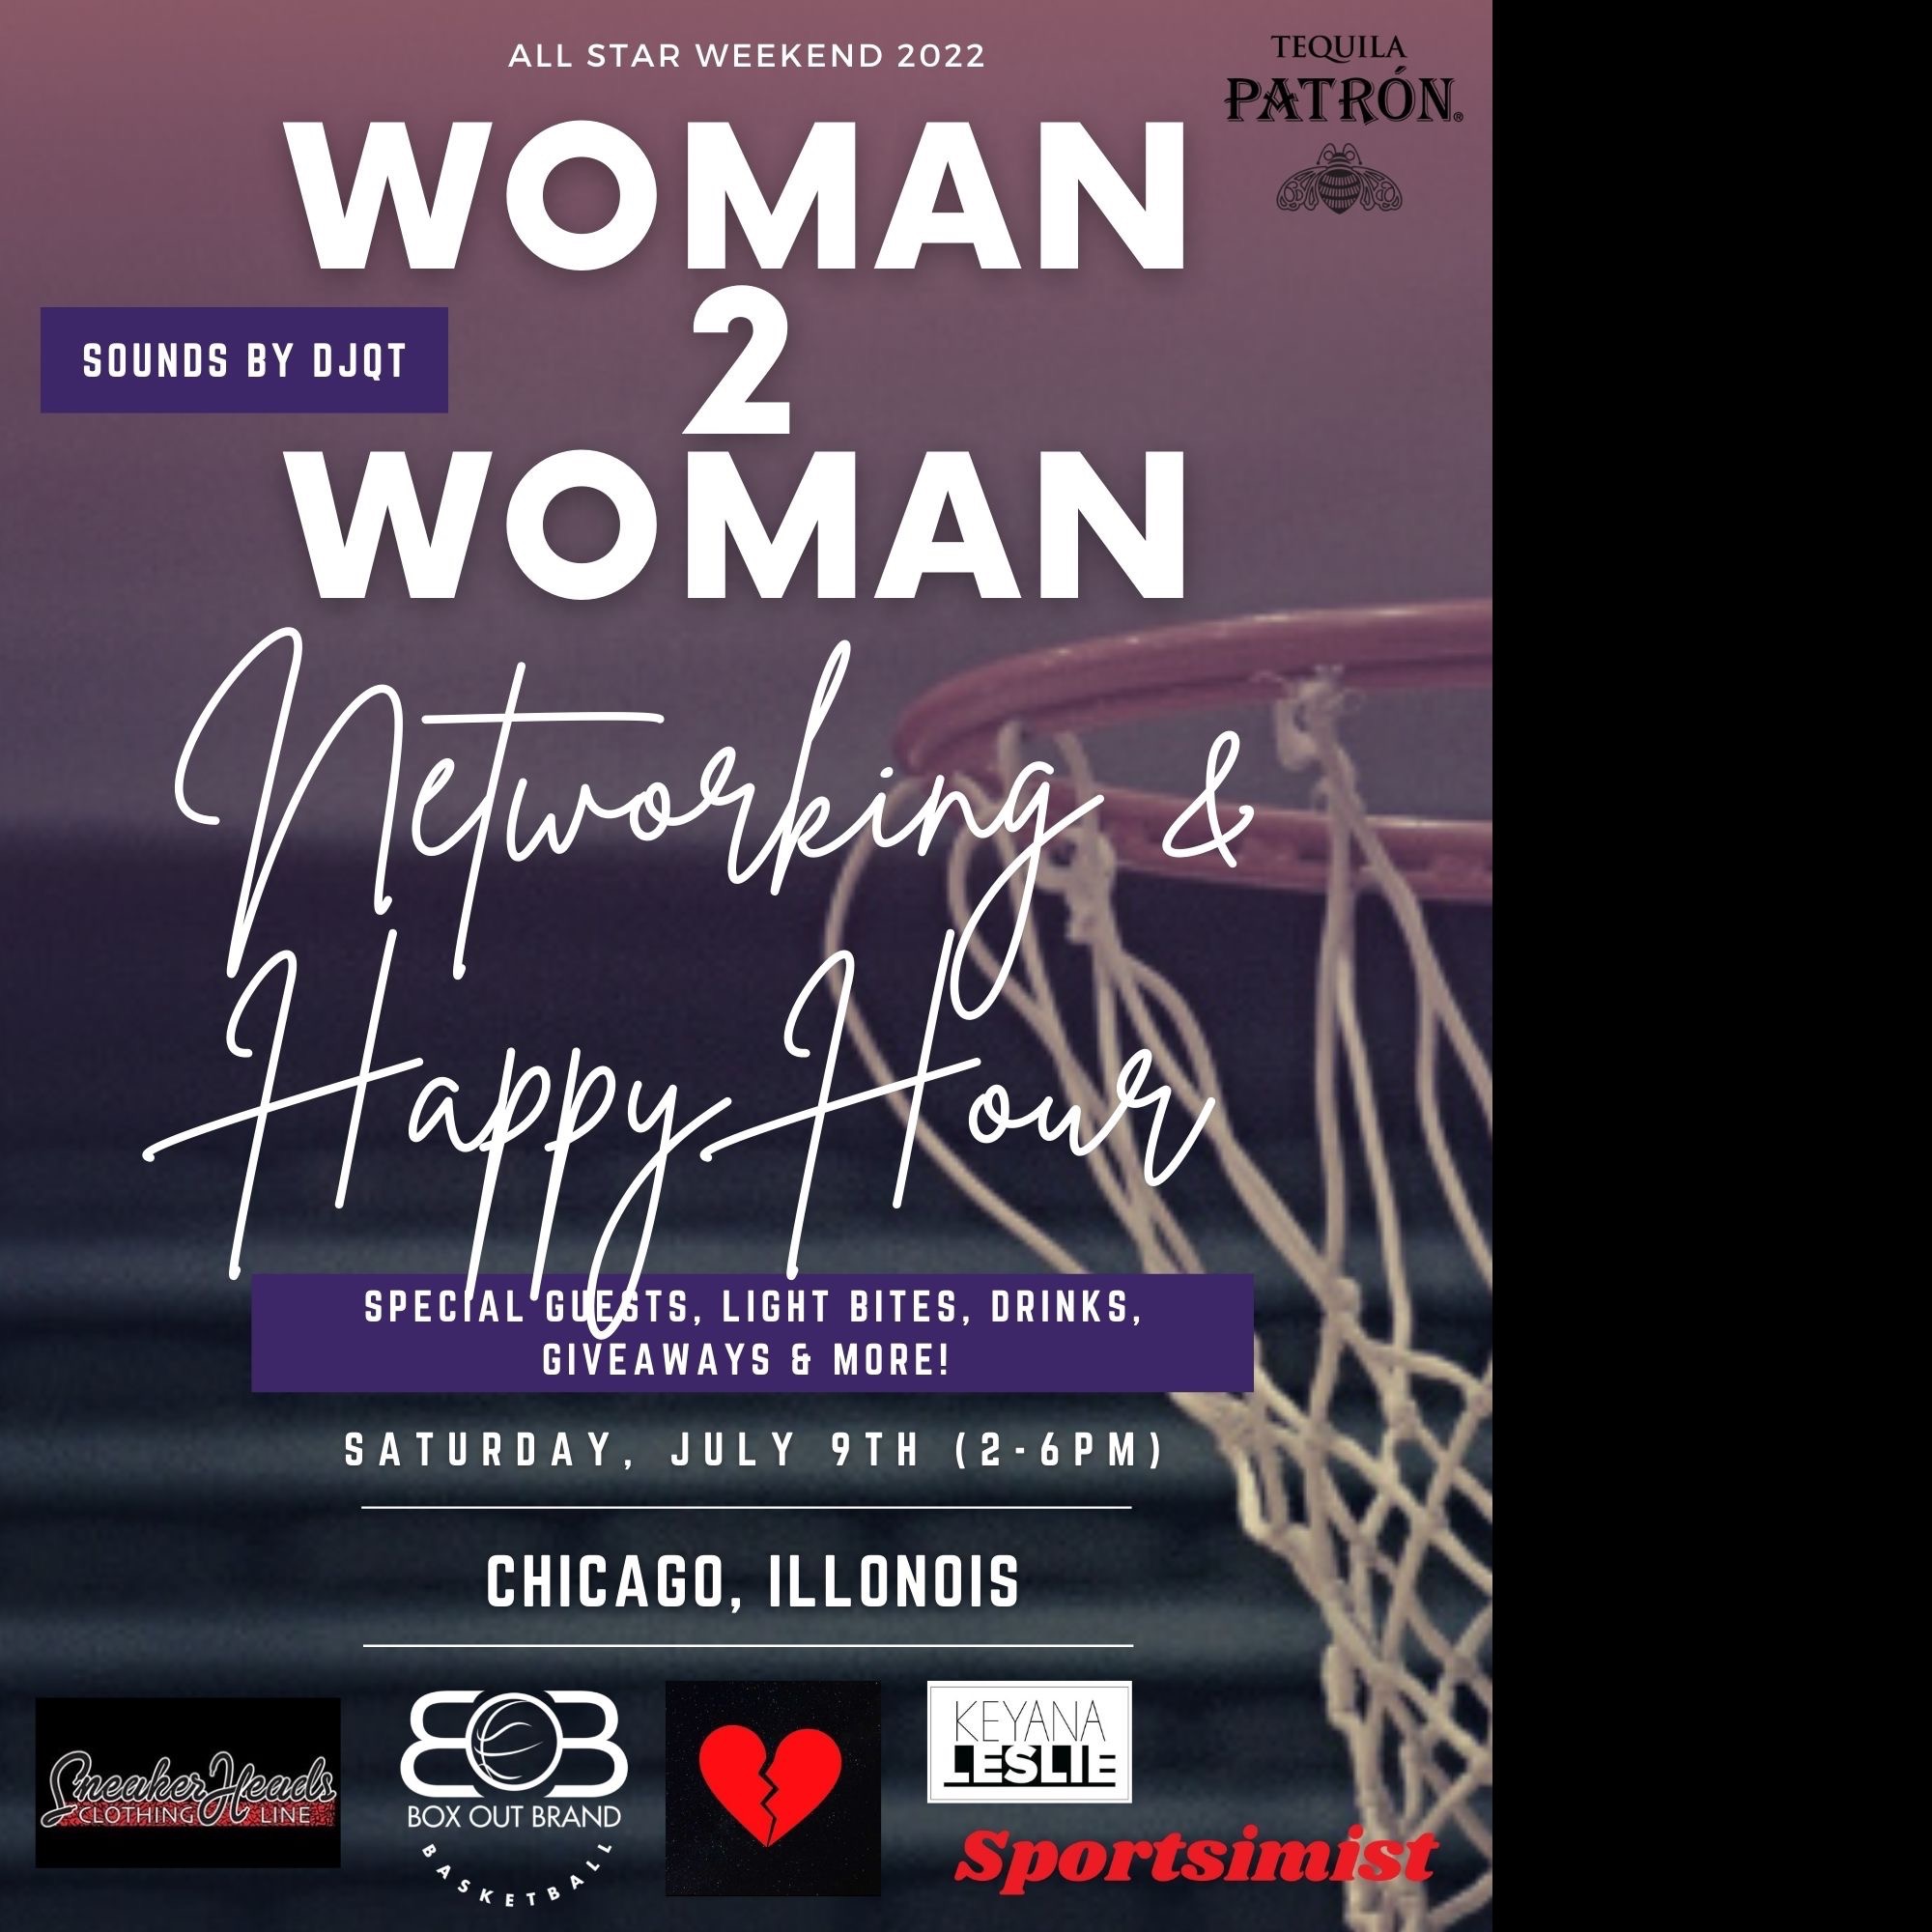 Woman 2 Woman: Networking & Happy Hour (WNBA ALL-STAR WEEKEND)